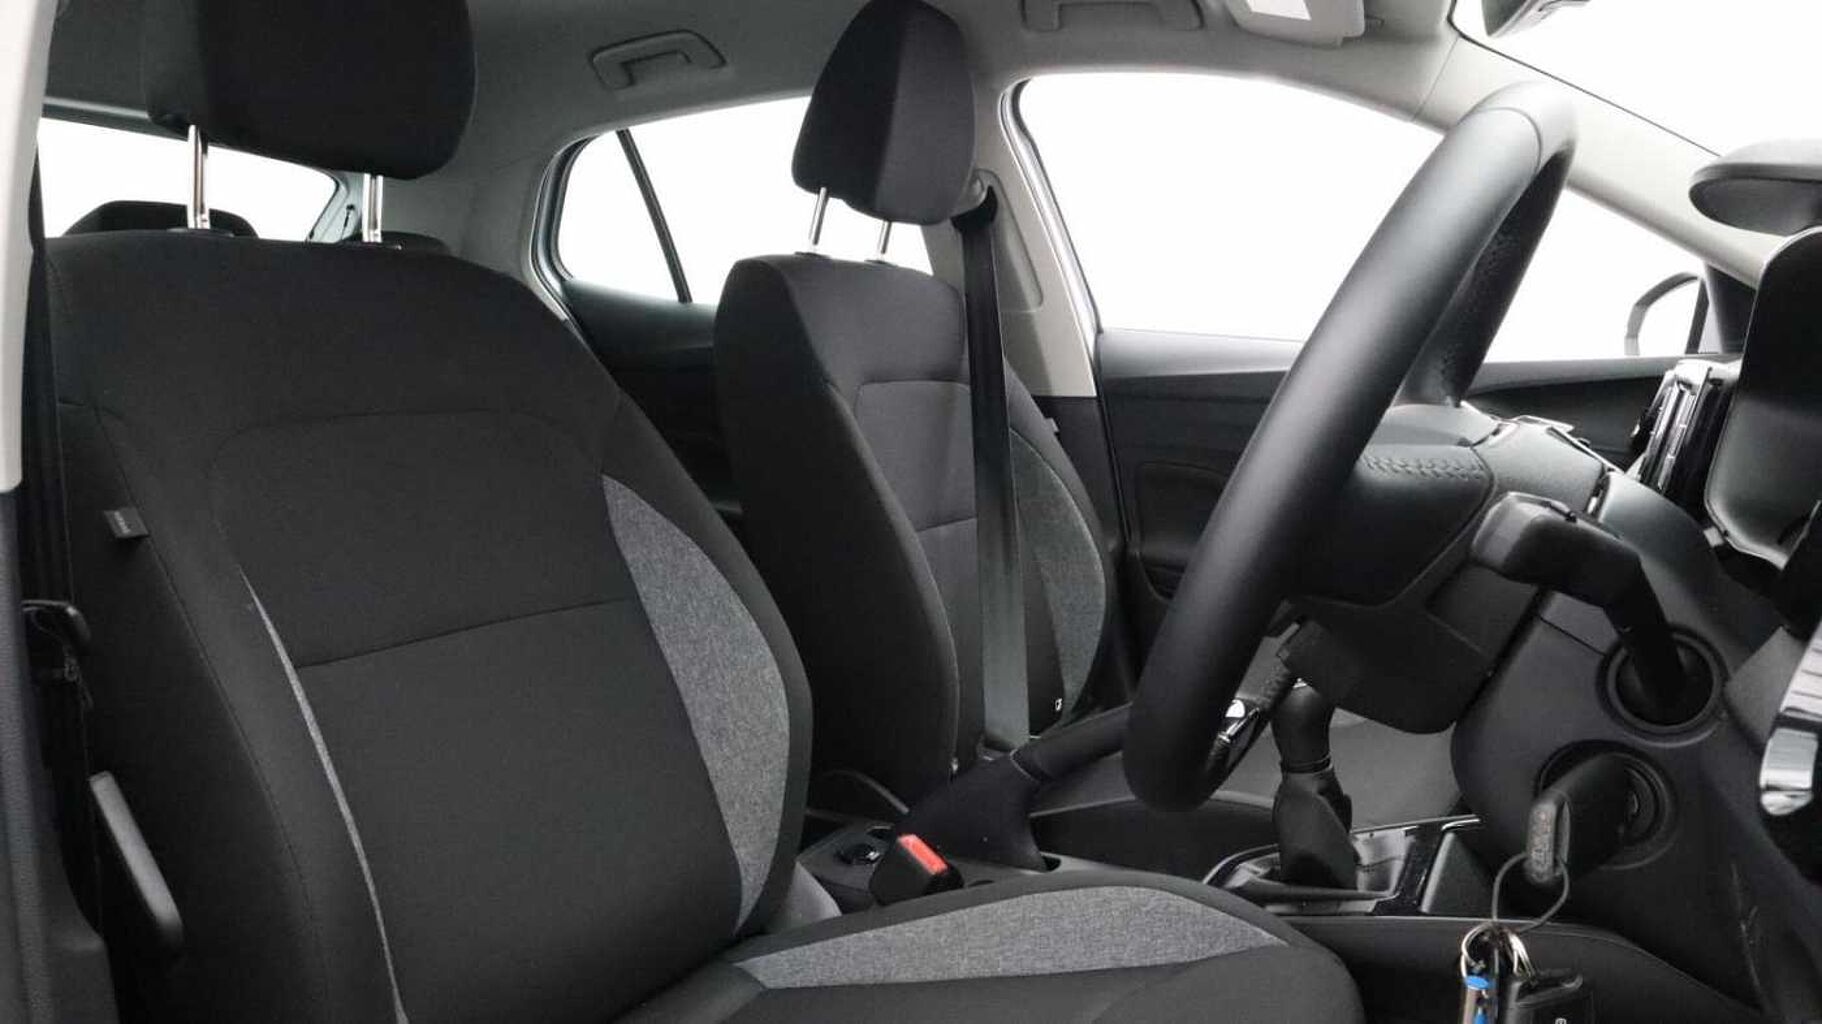 SKODA Fabia 1.0 TSI (95ps) SE Comfort 5-Dr Hatchback